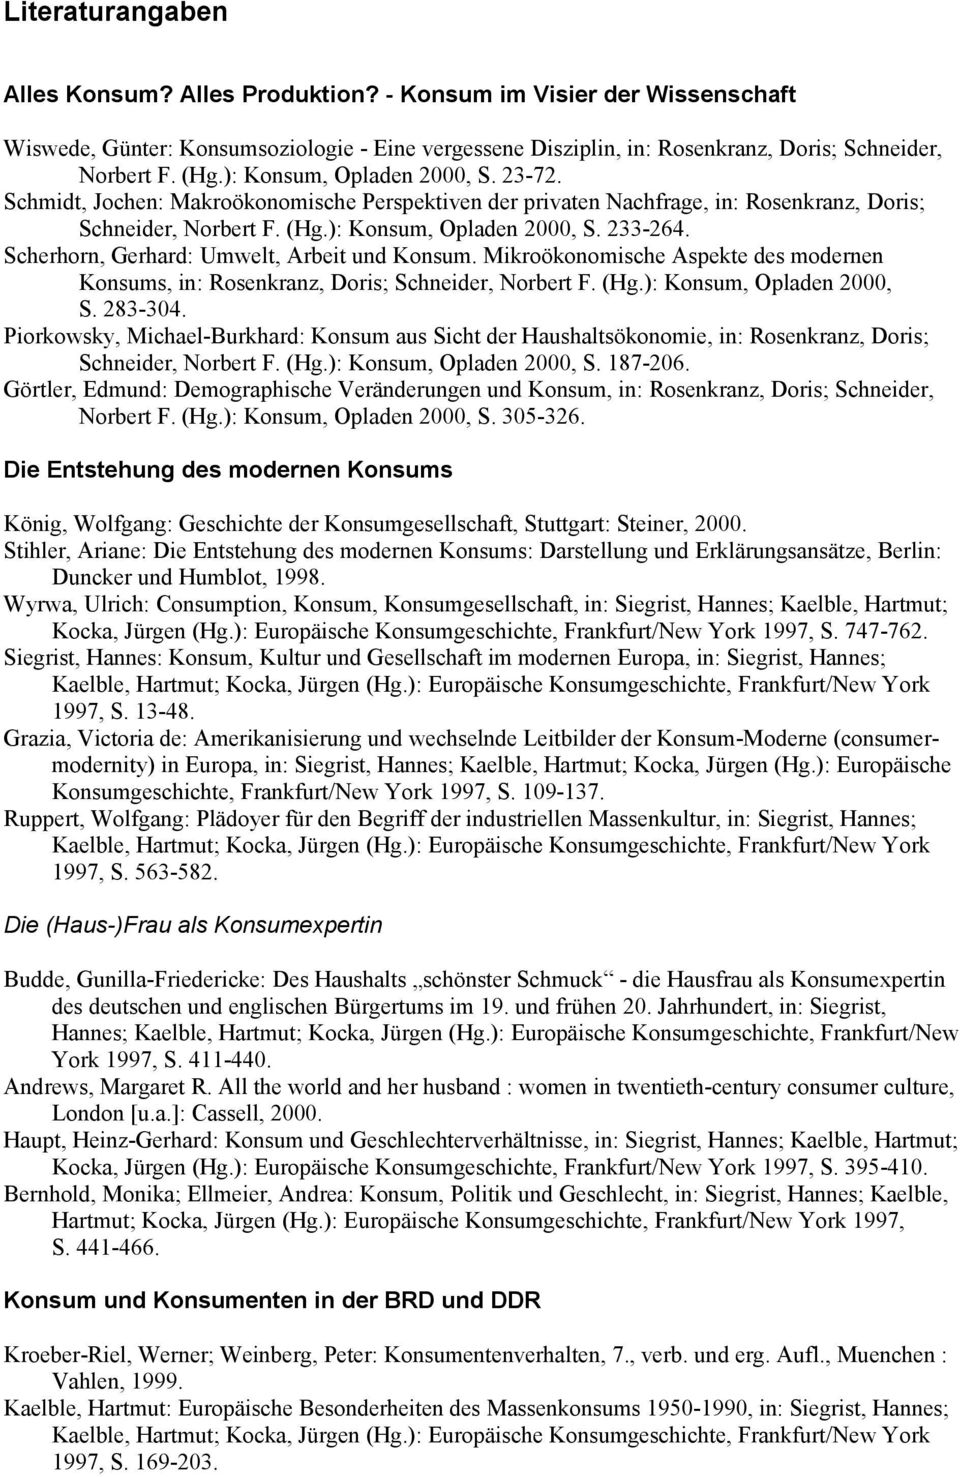 Scherhorn, Gerhard: Umwelt, Arbeit und Konsum. Mikroökonomische Aspekte des modernen Konsums, in: Rosenkranz, Doris; Schneider, Norbert F. (Hg.): Konsum, Opladen 2000, S. 283-304.